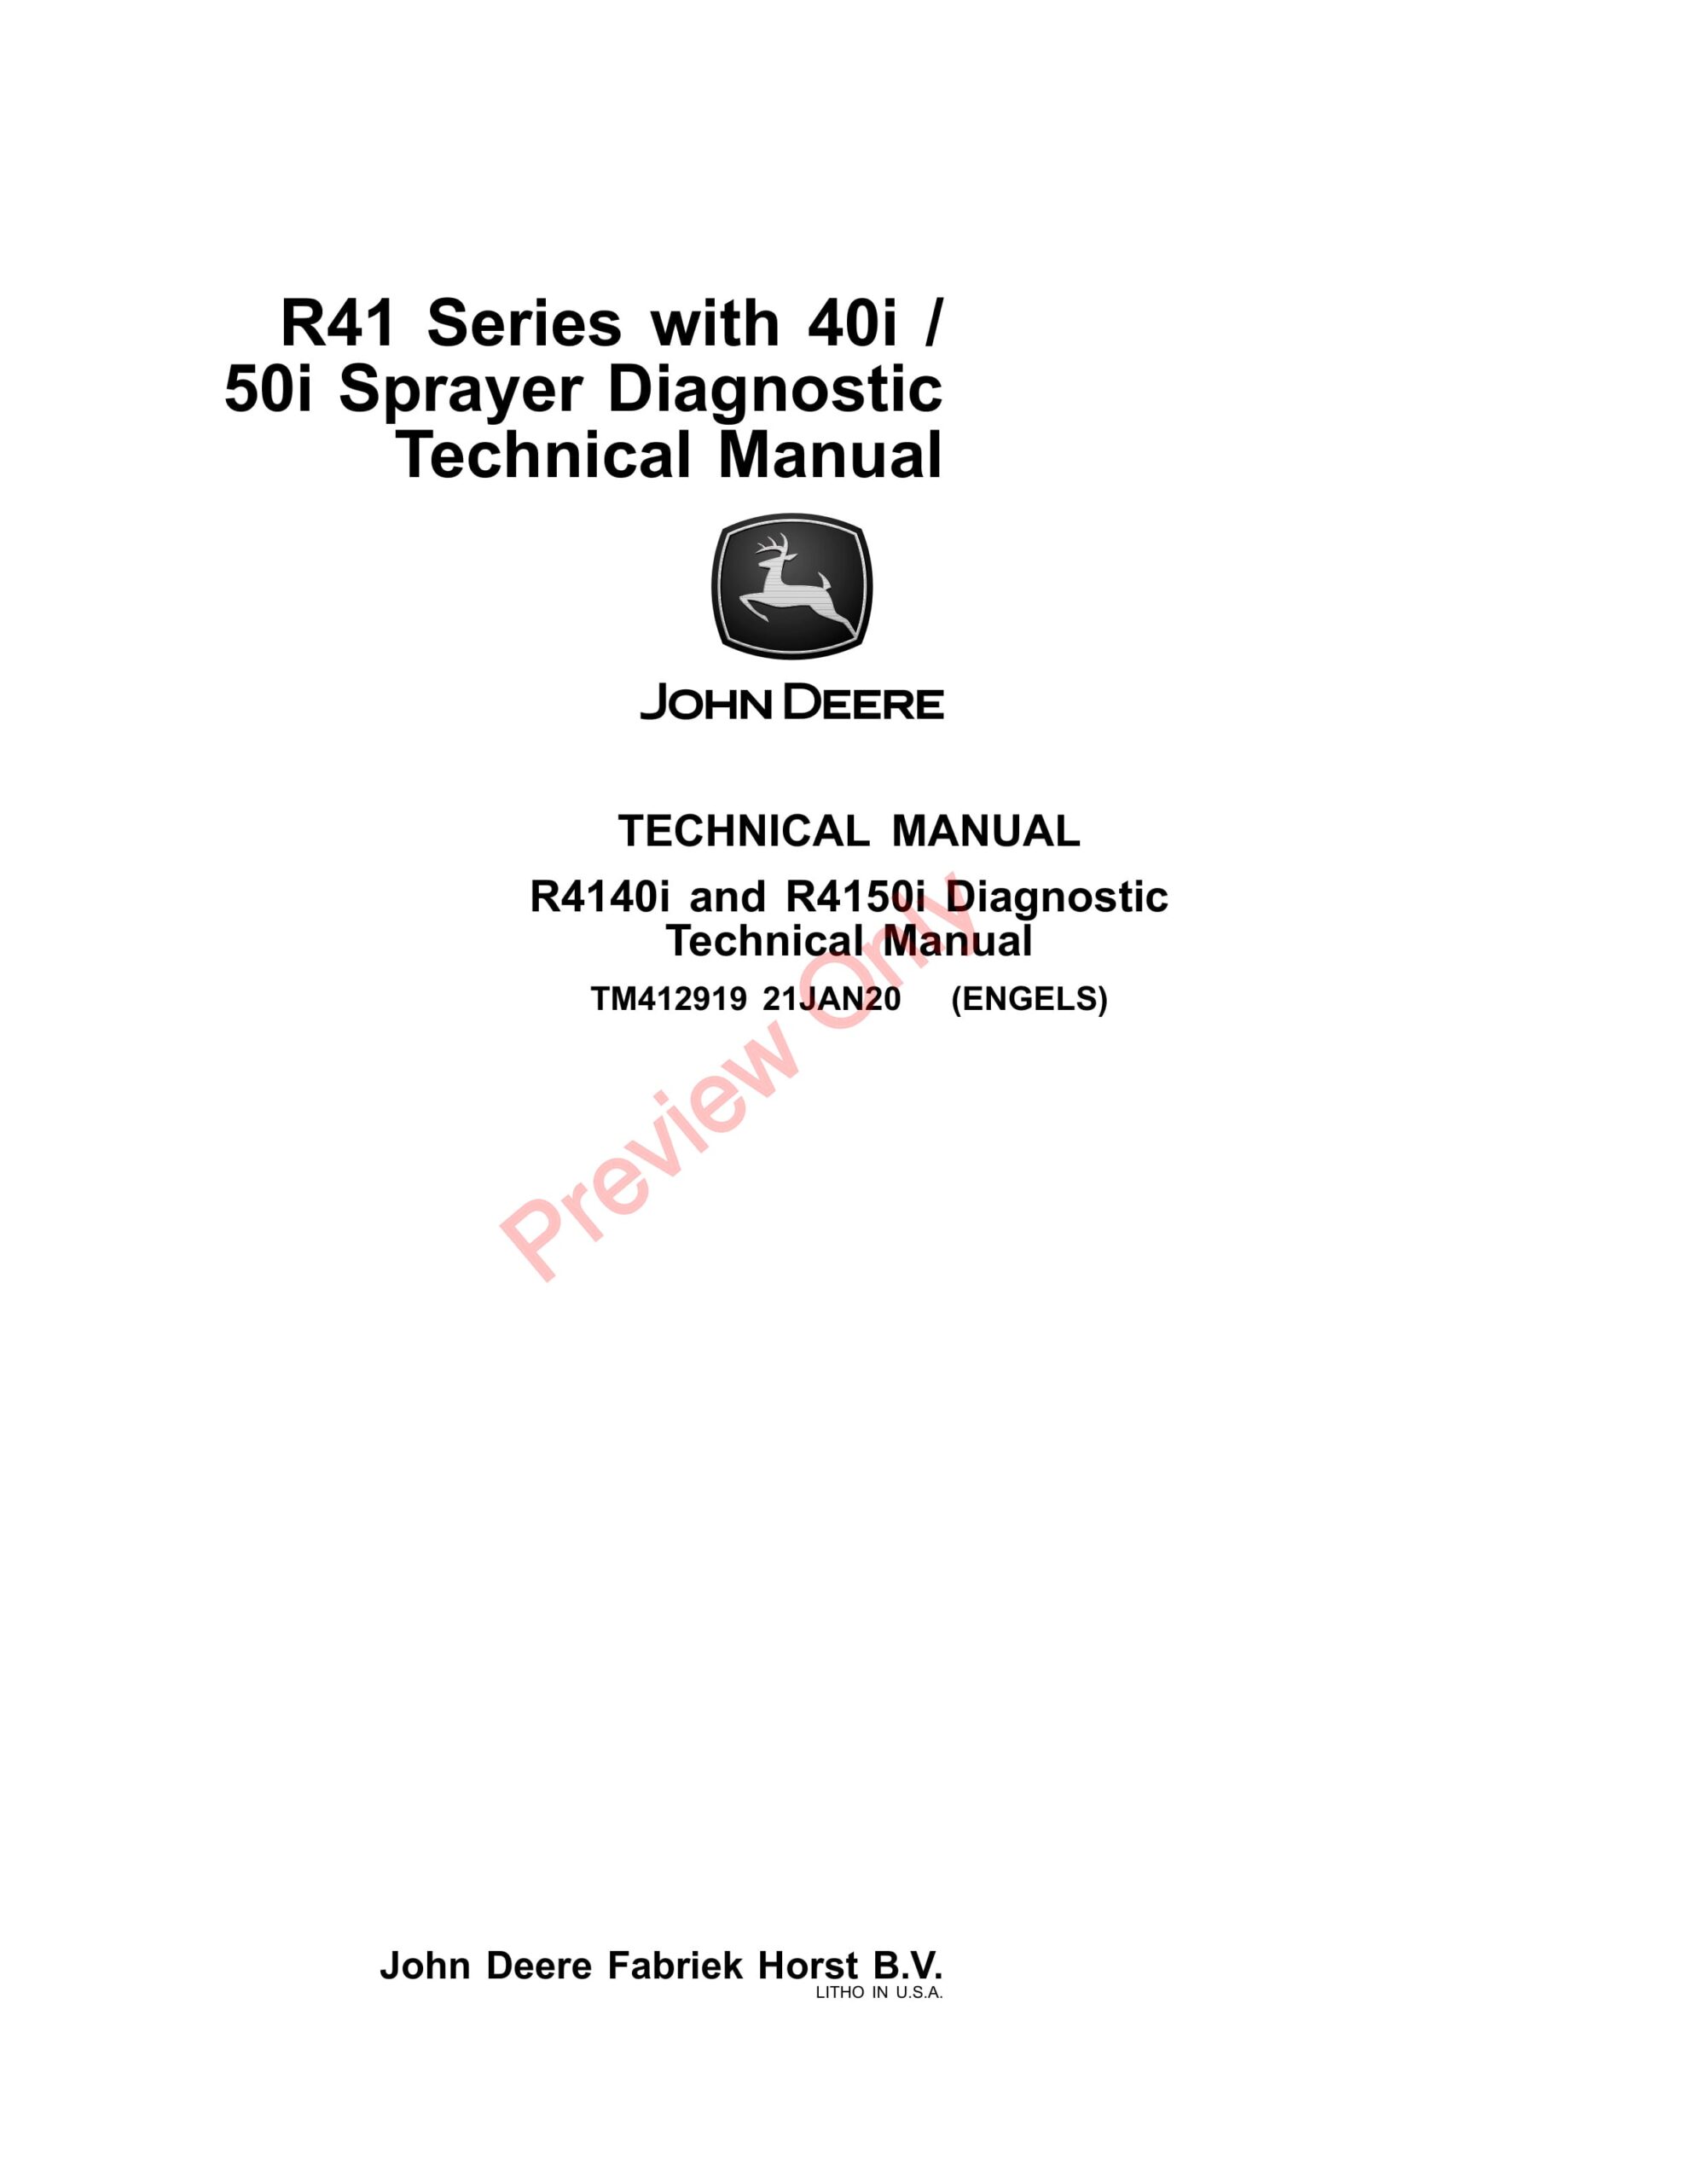 John Deere R4140i and R4150i Chemical Application Vehicle and Demountable Crop Sprayer Technical Manual TM412919 21JAN20-1